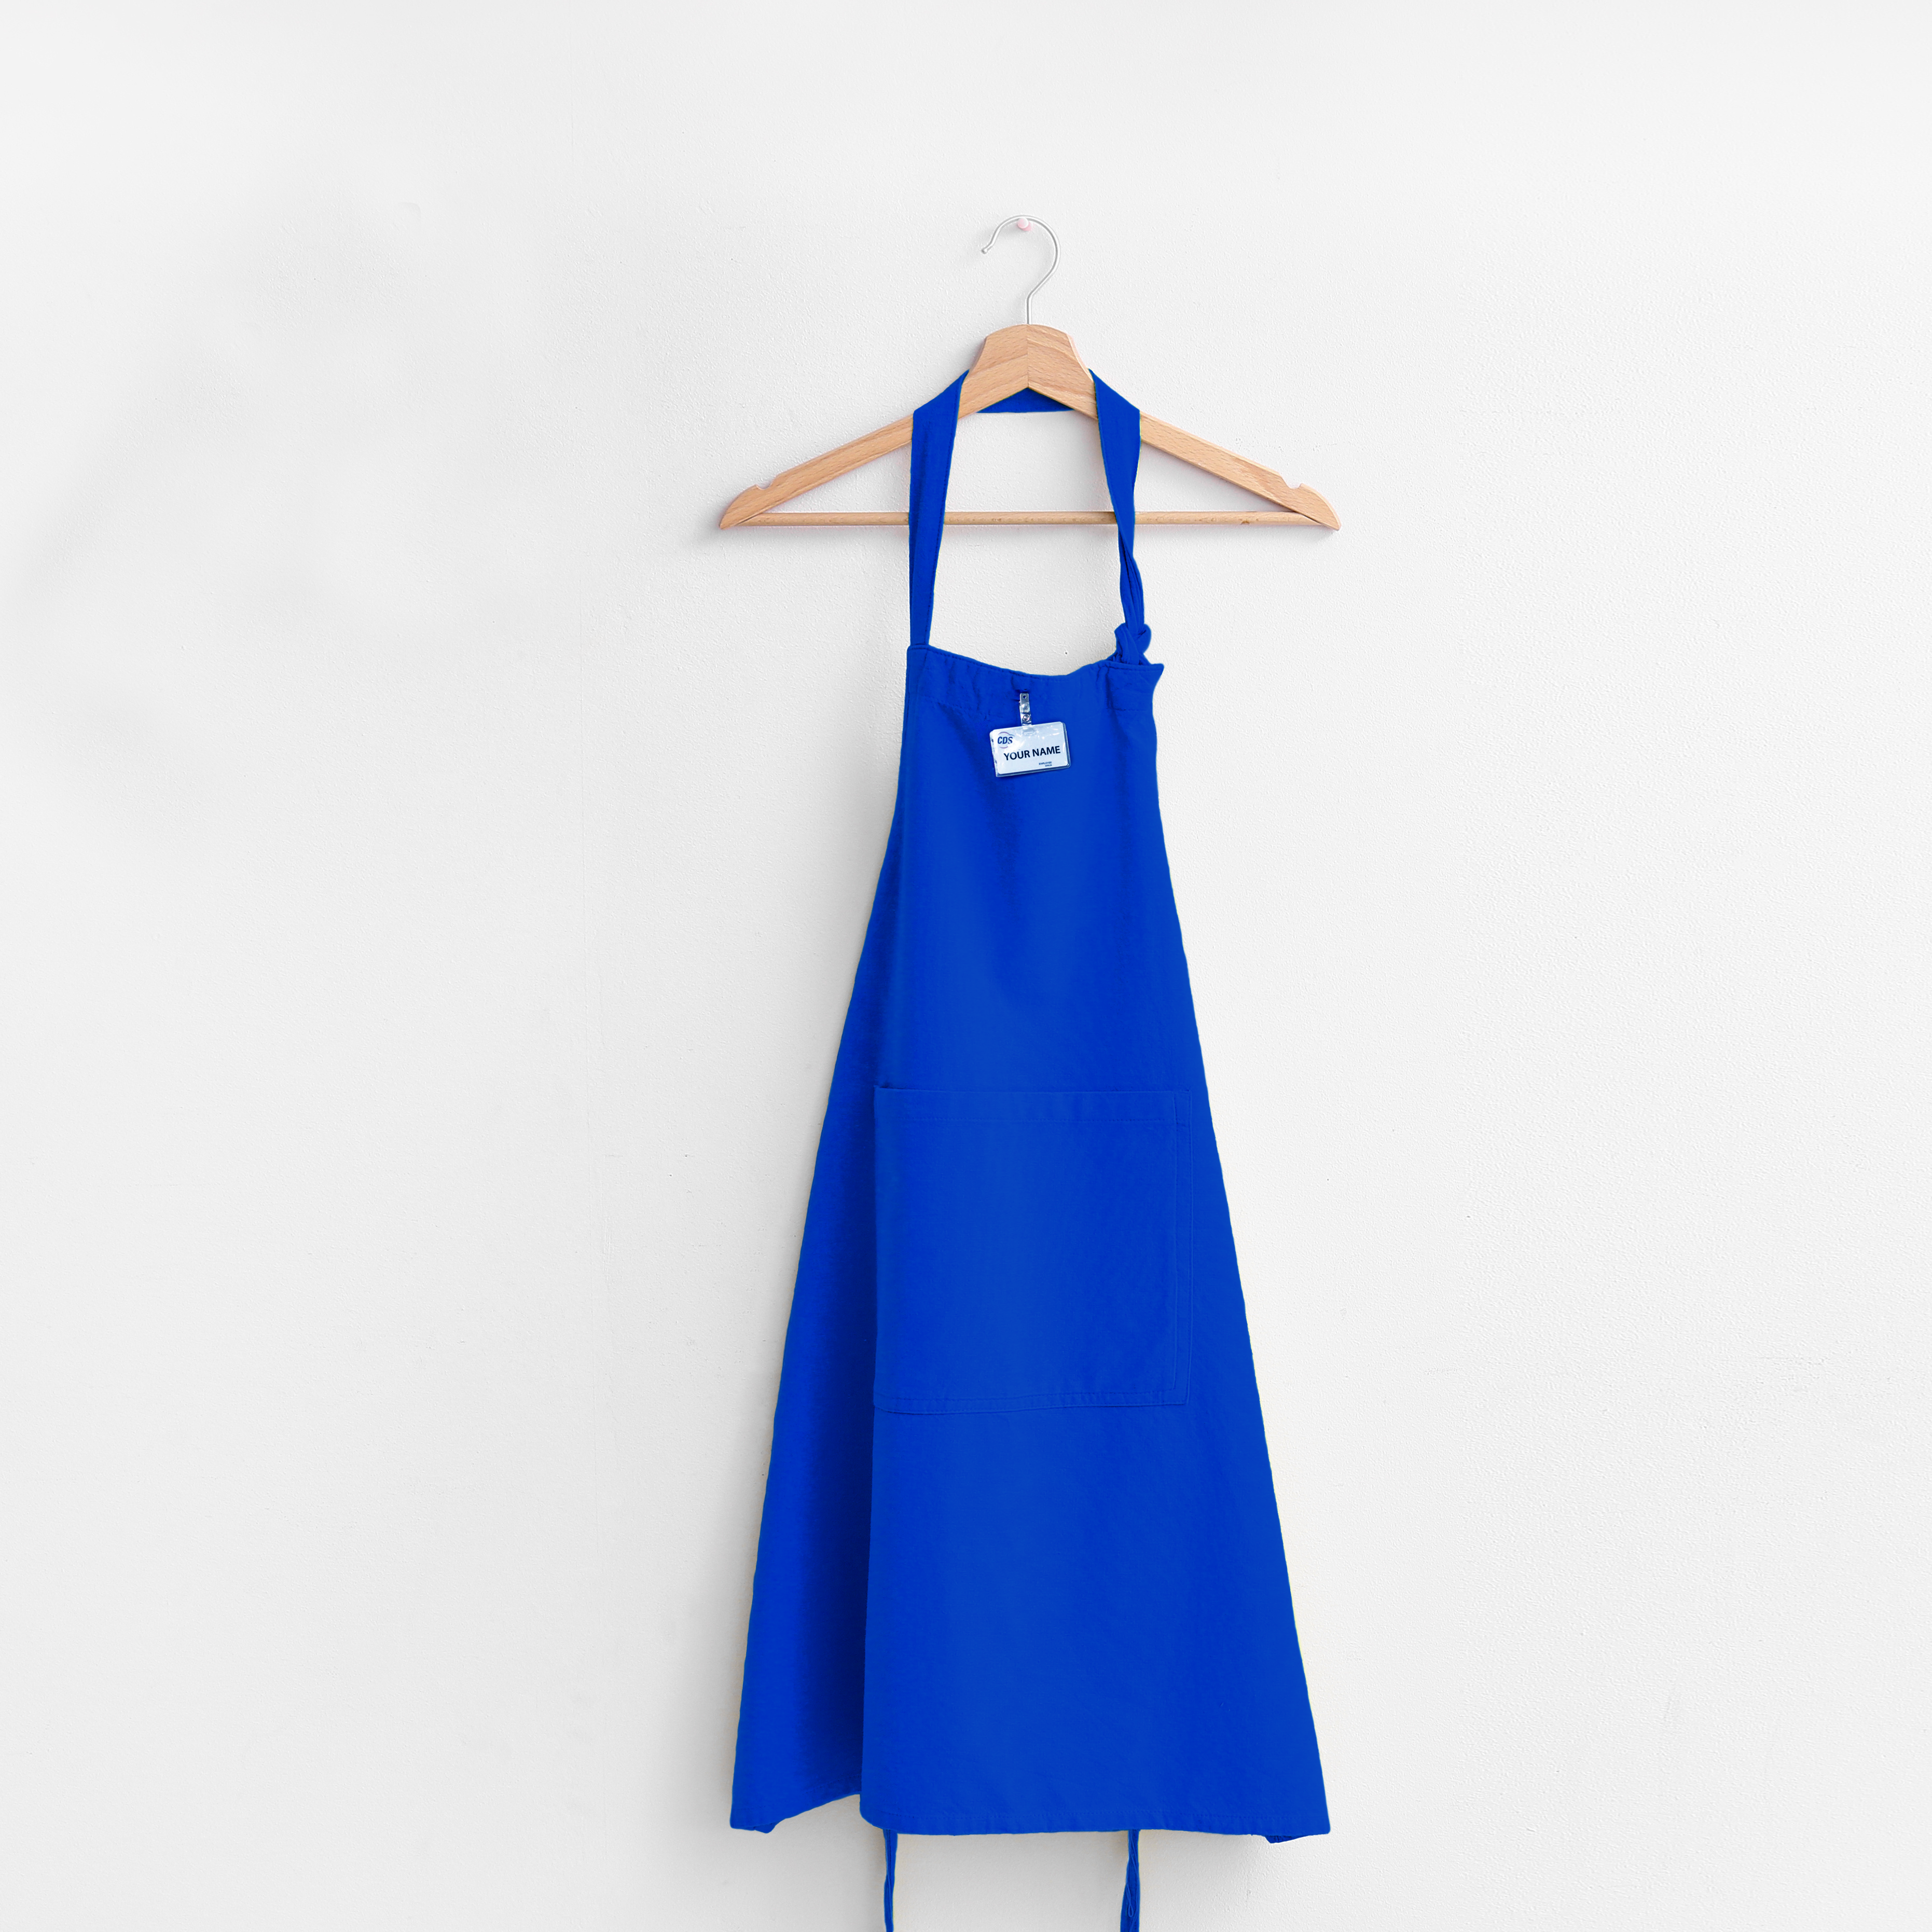 Blue apron hanging on a hanger